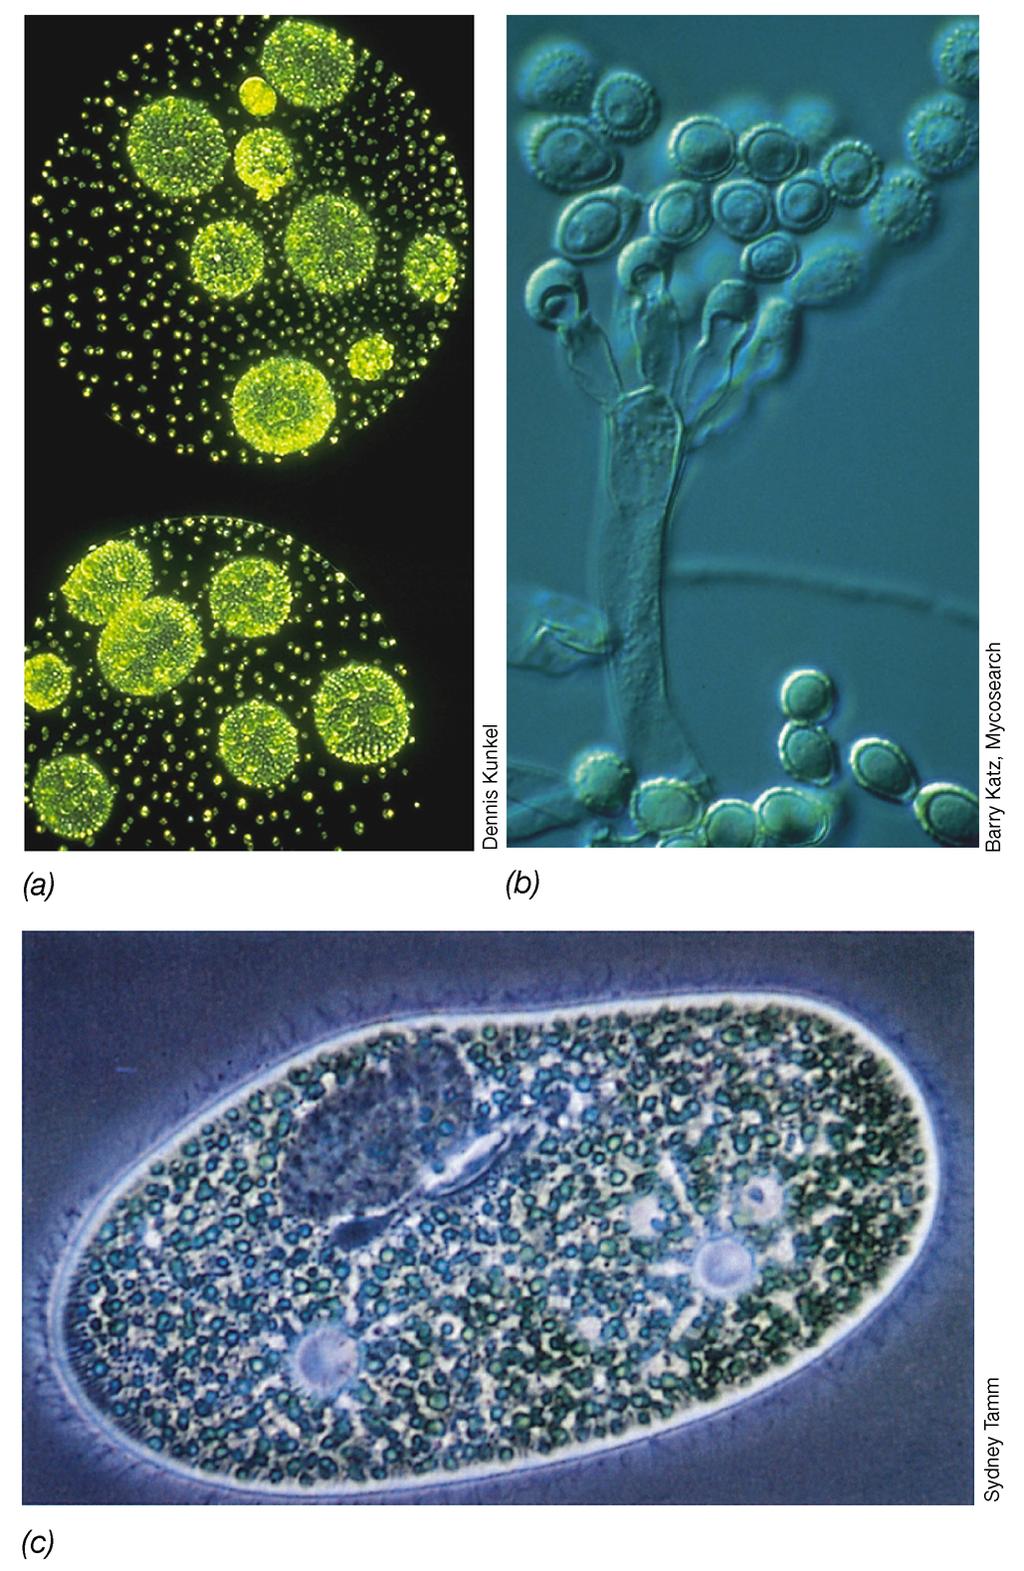 Microbial Eukarya Fungi, Ascomycete with conidiophores and